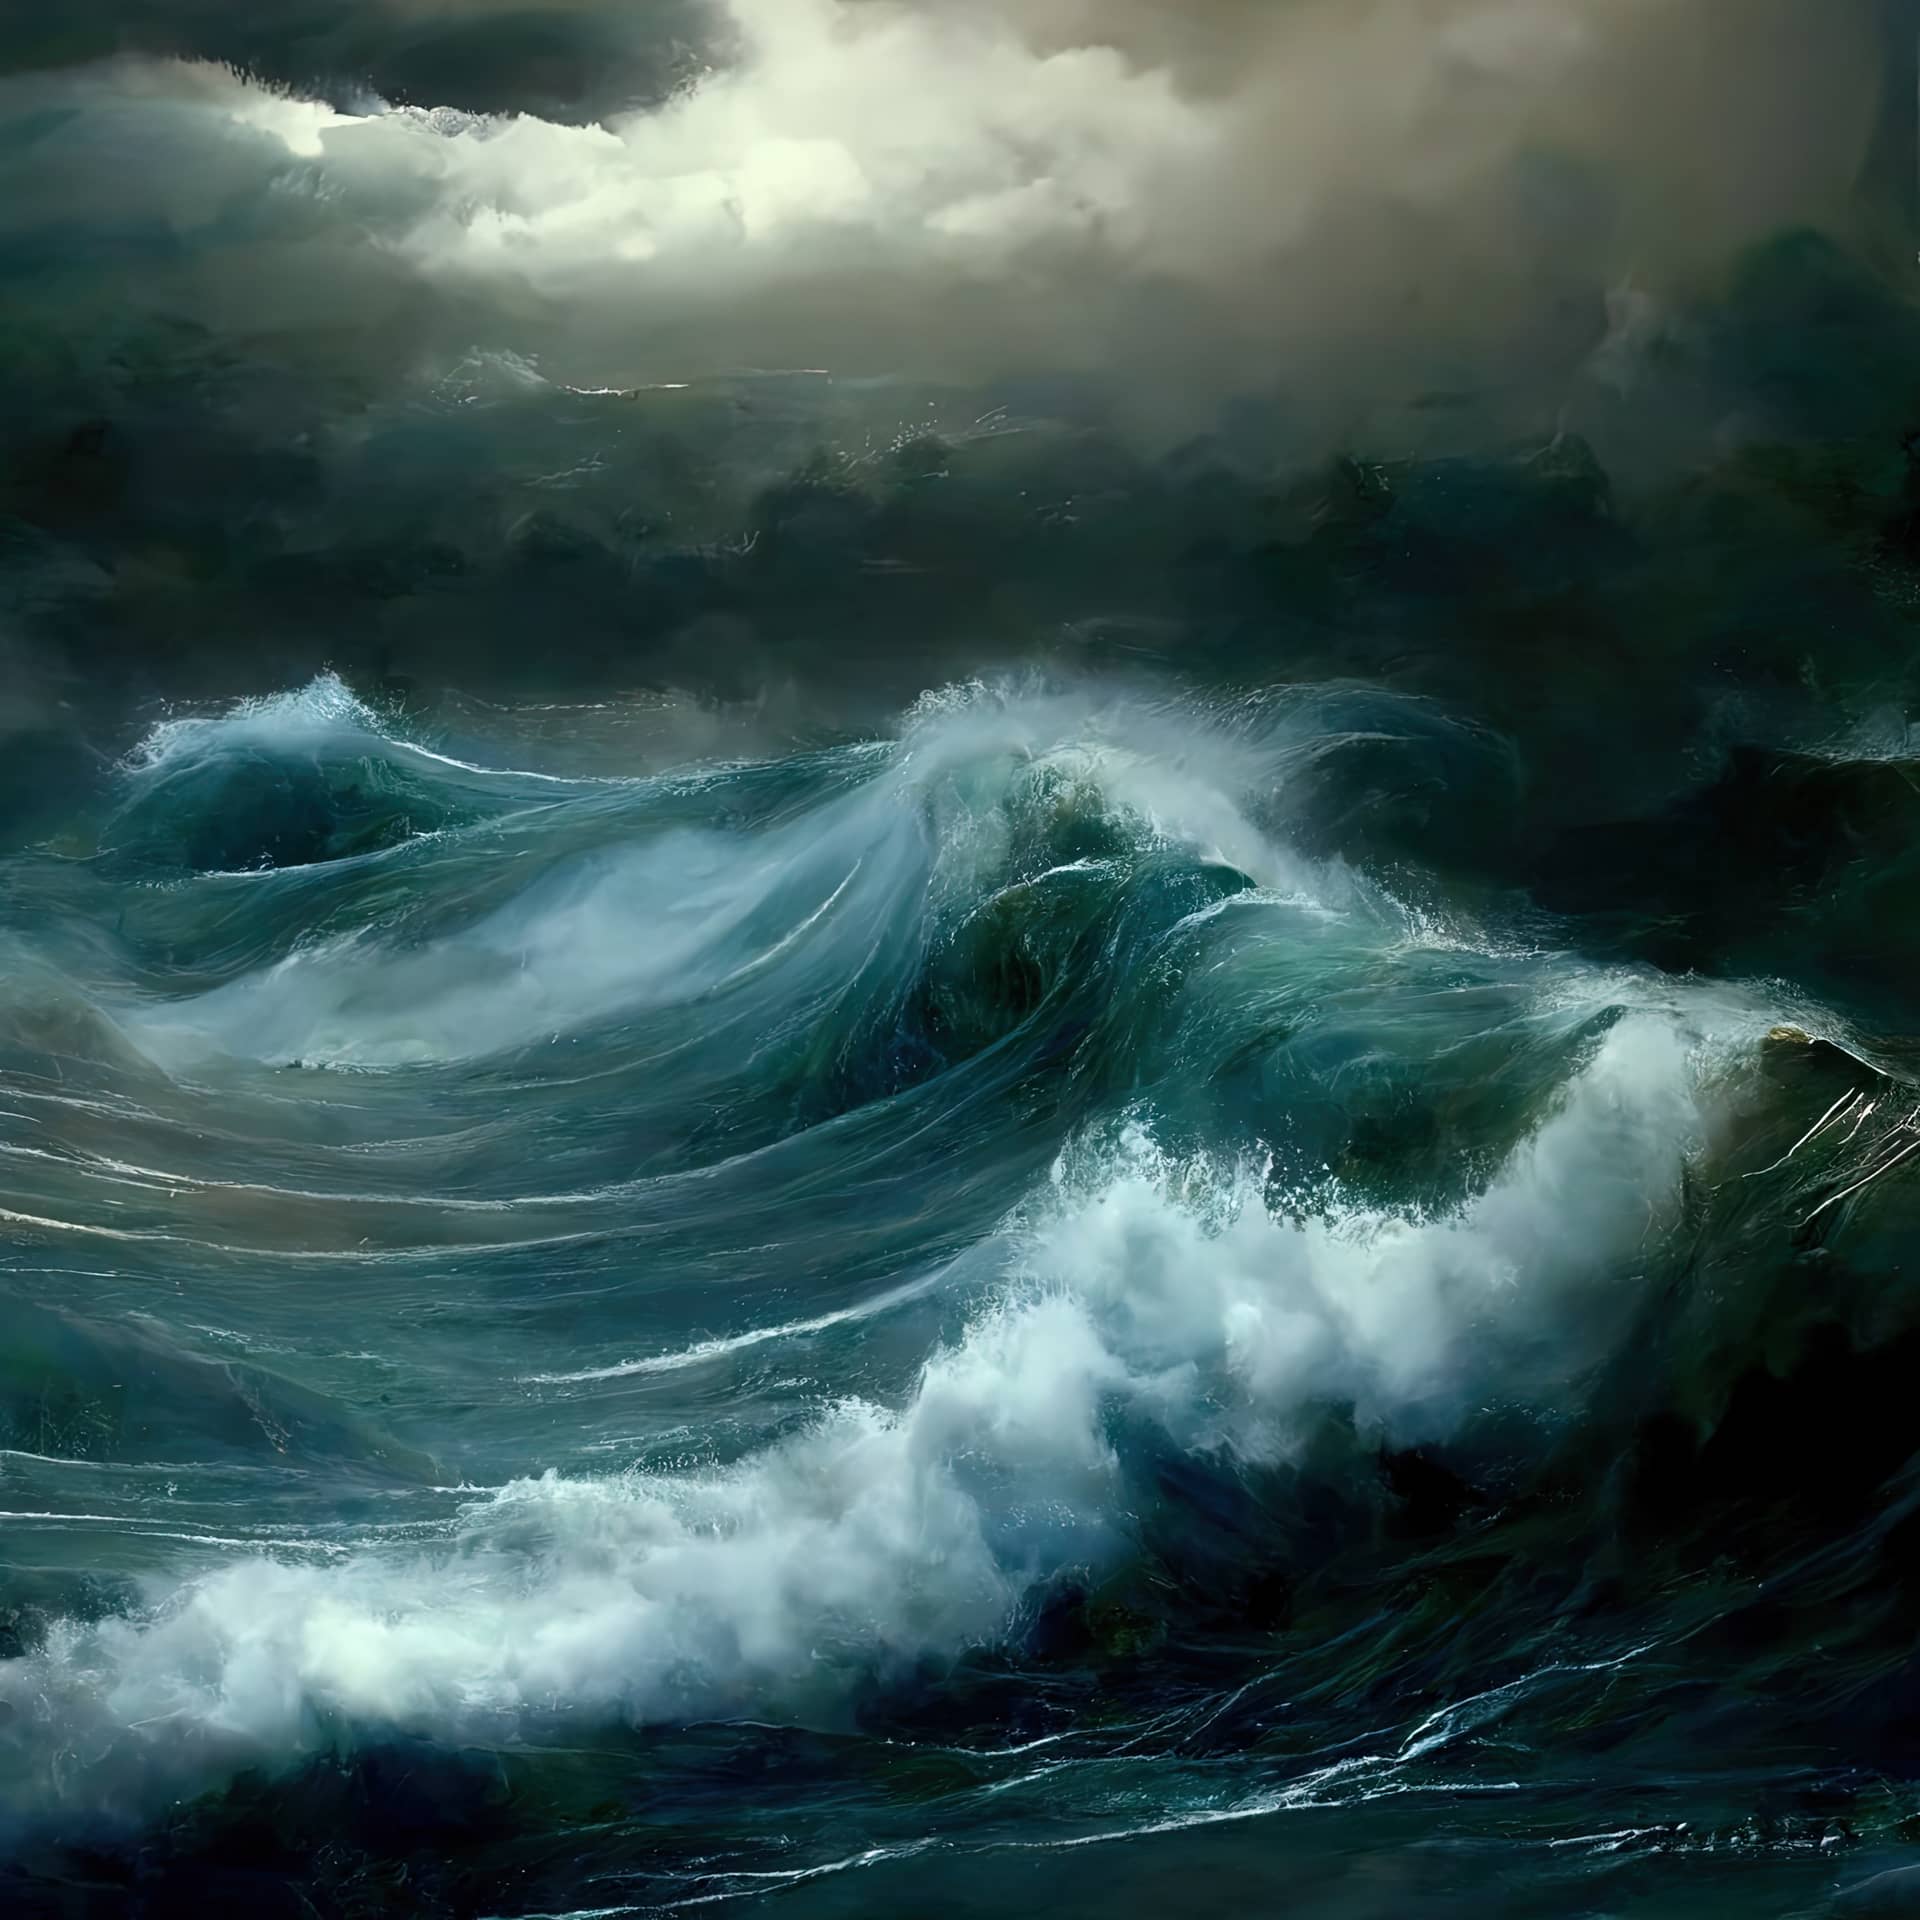 Middle ocean with huge waves grey sky generative generative image